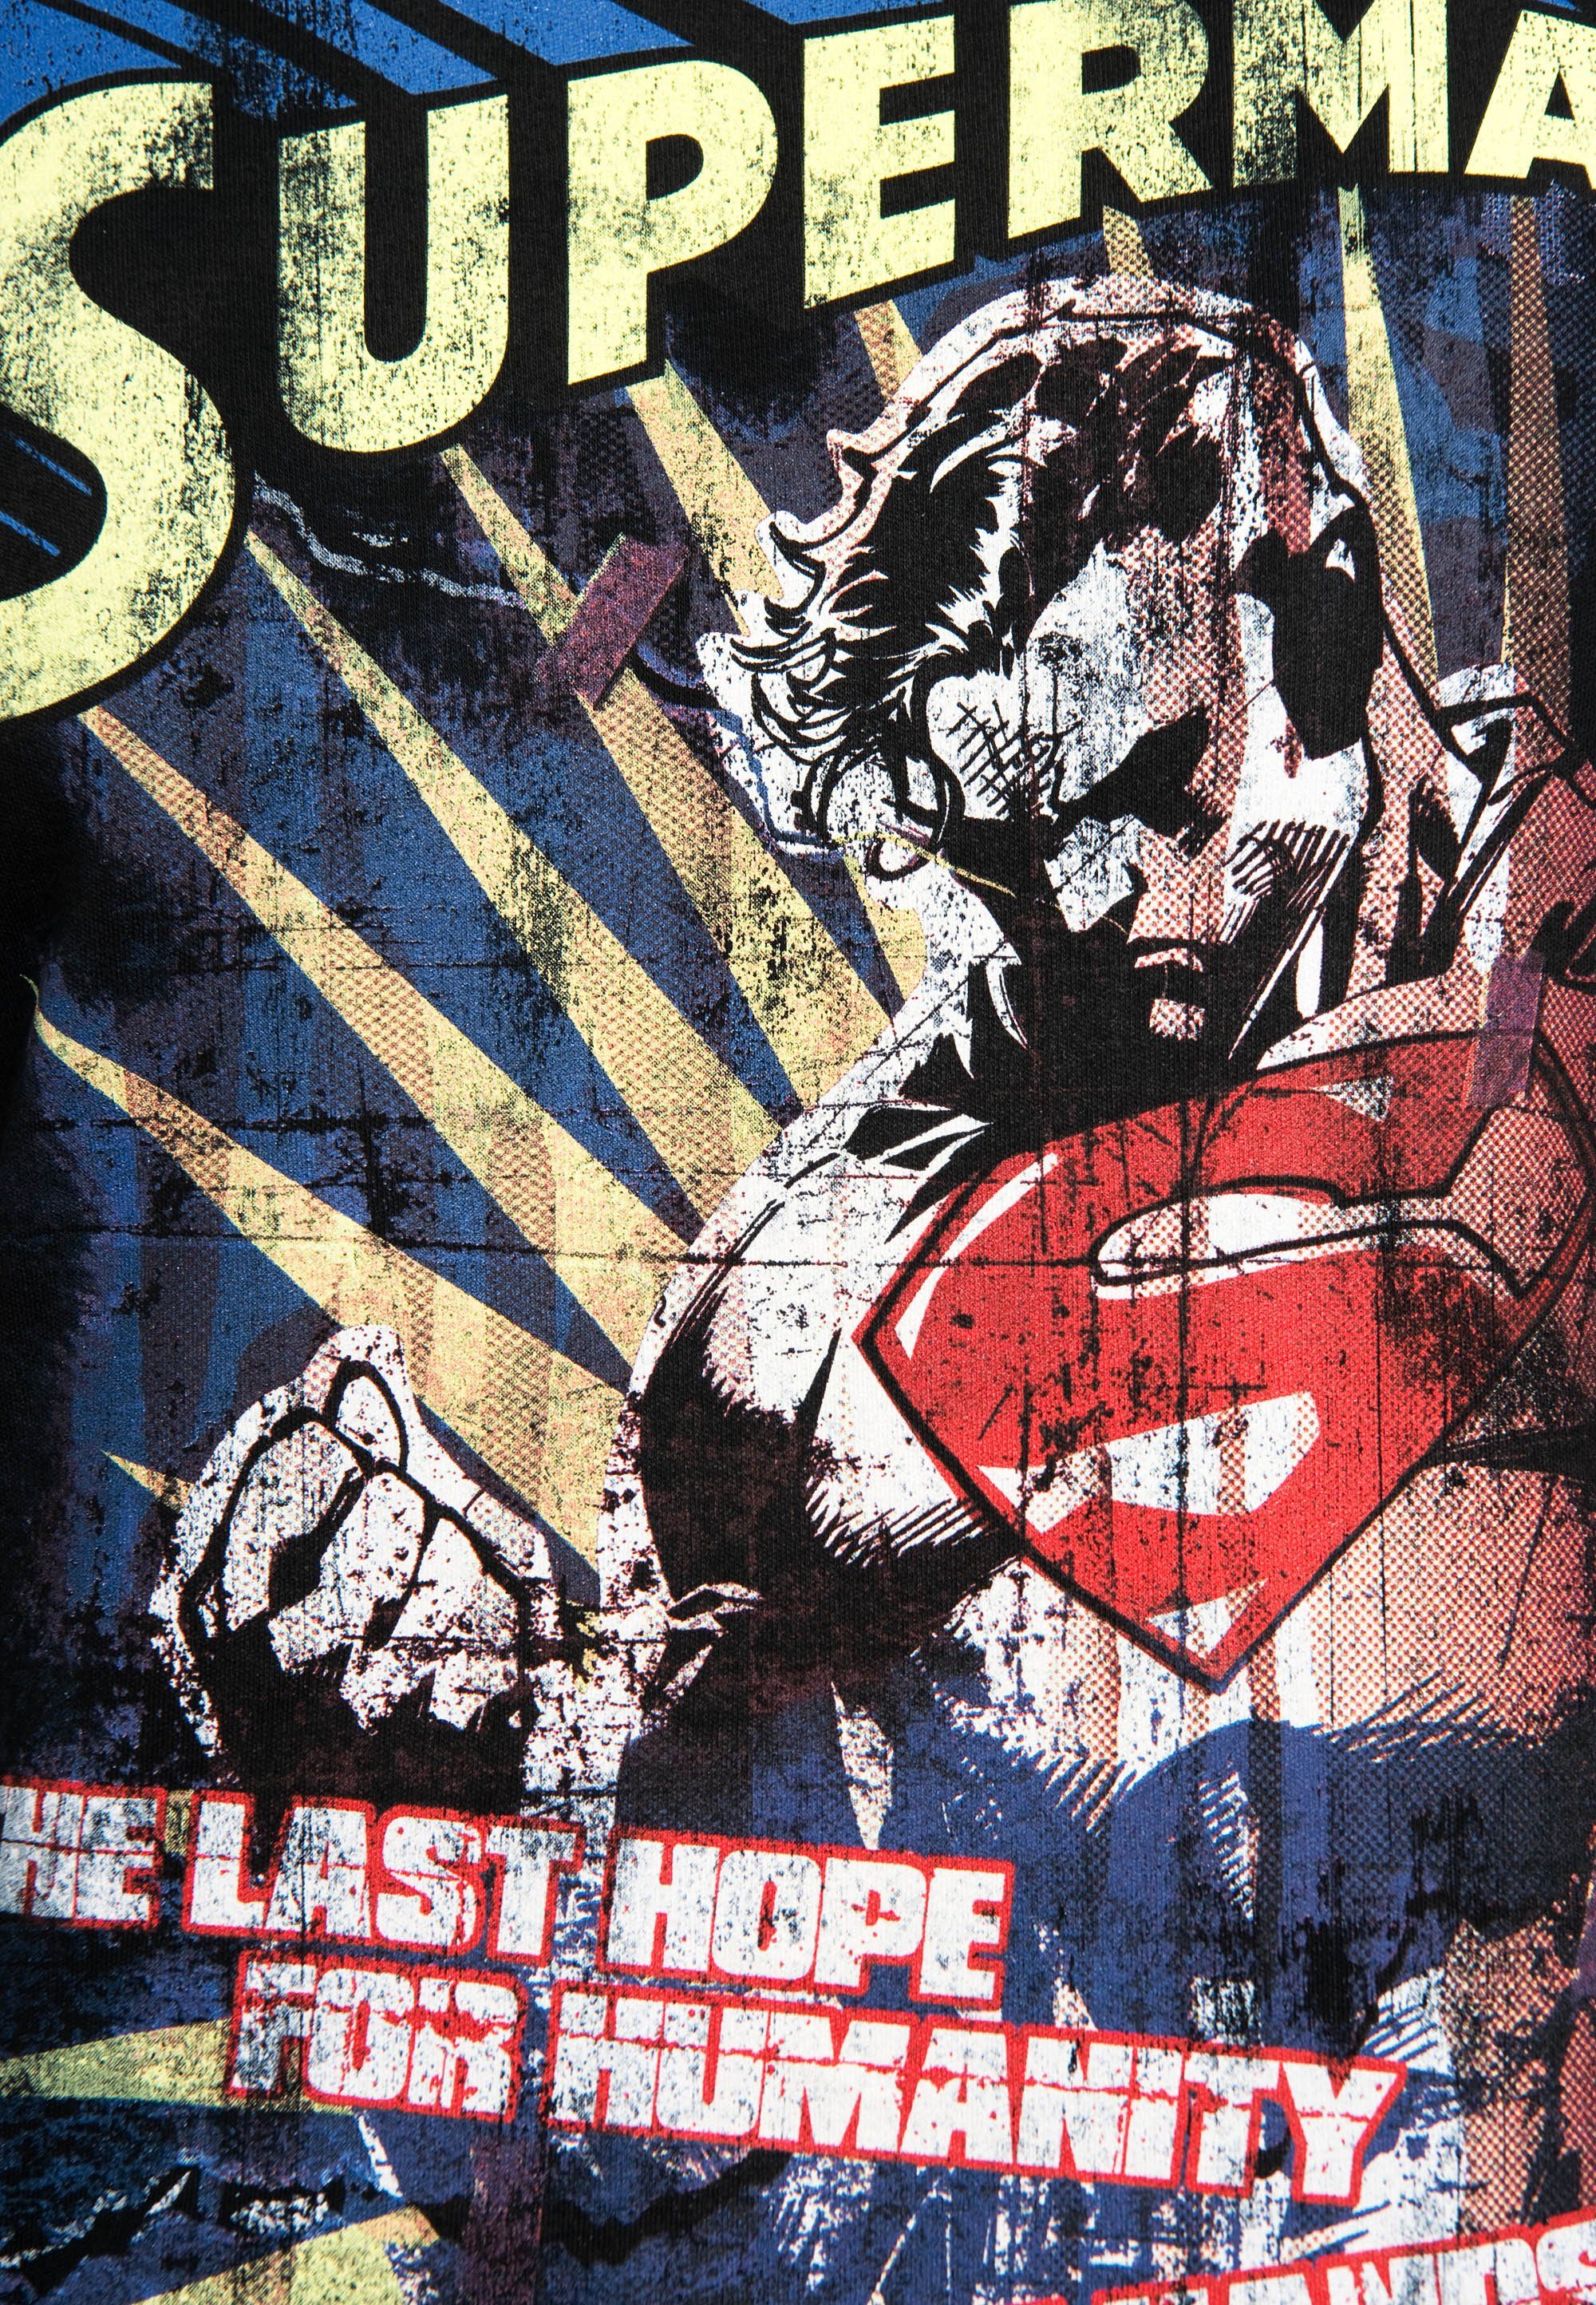 LOGOSHIRT T-Shirt Superman mit coolem Retro-Motiv